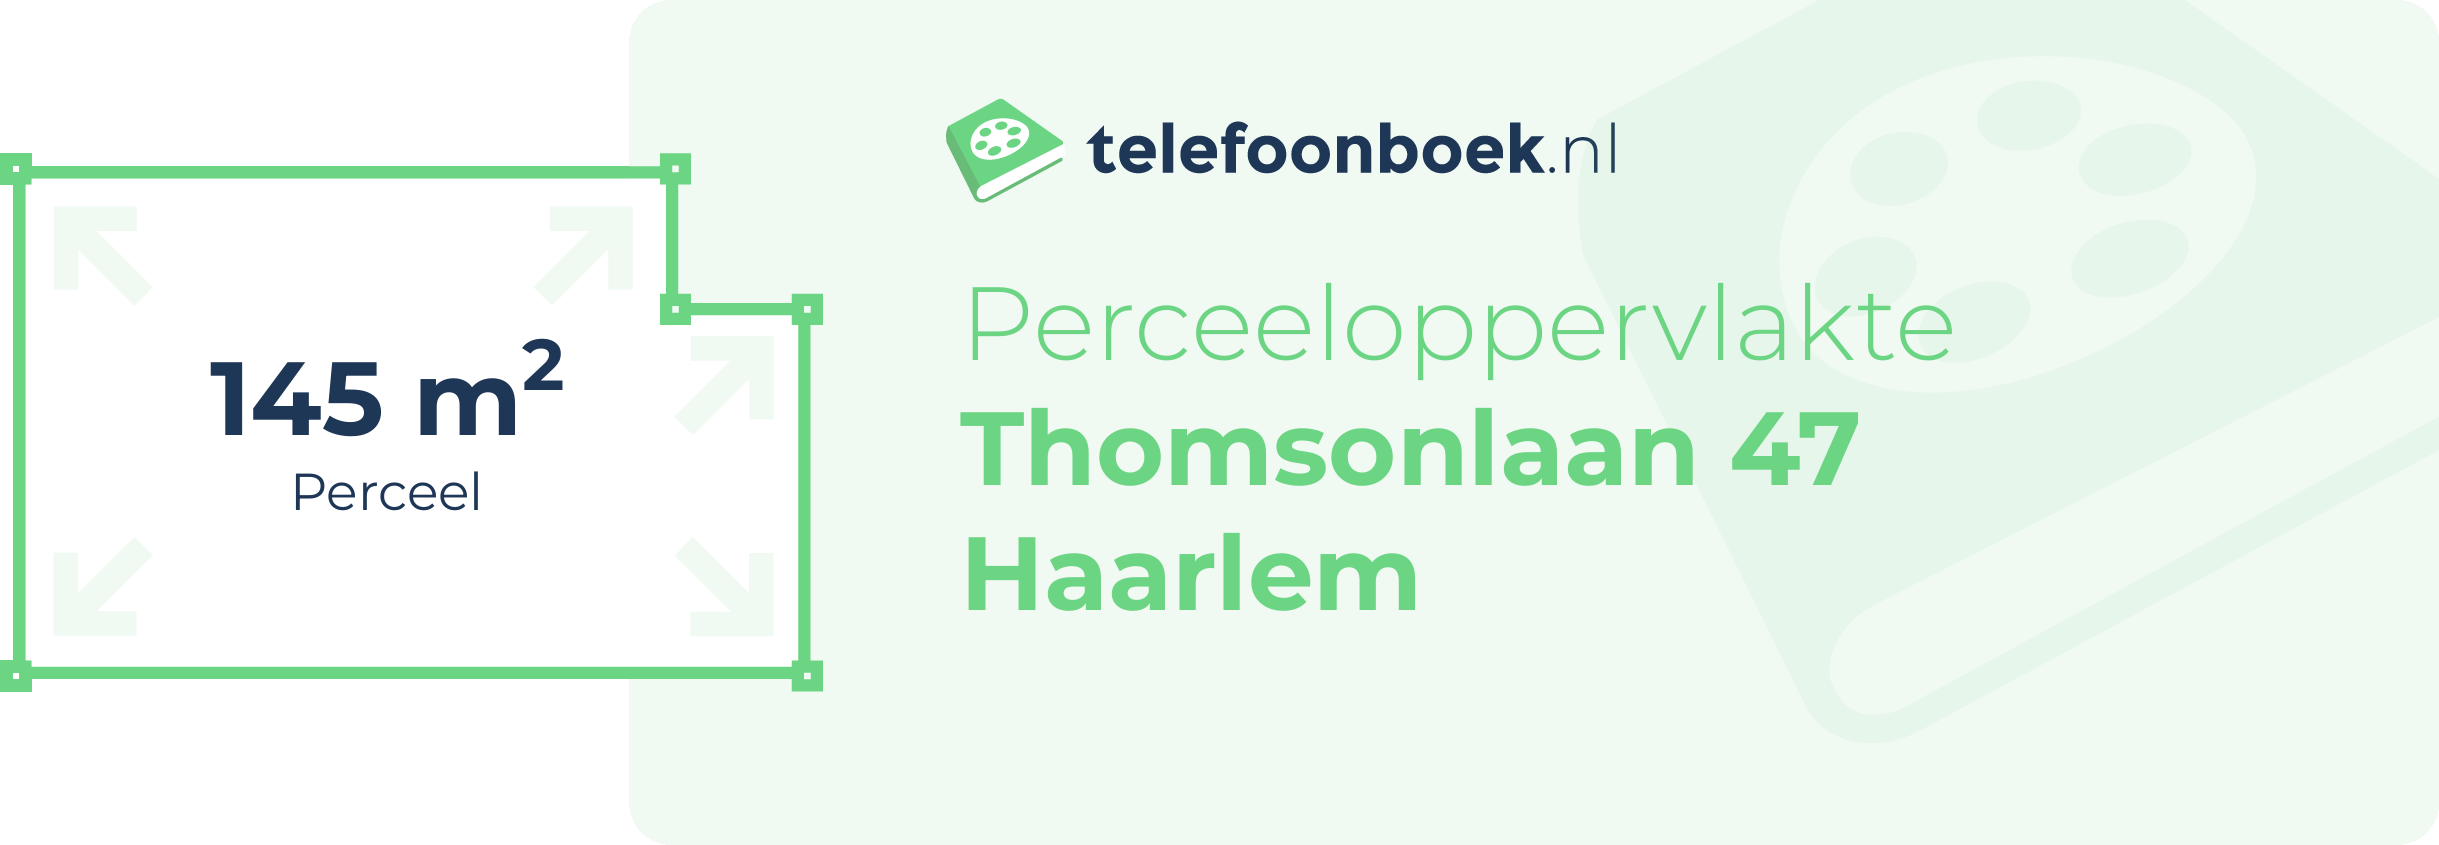 Perceeloppervlakte Thomsonlaan 47 Haarlem